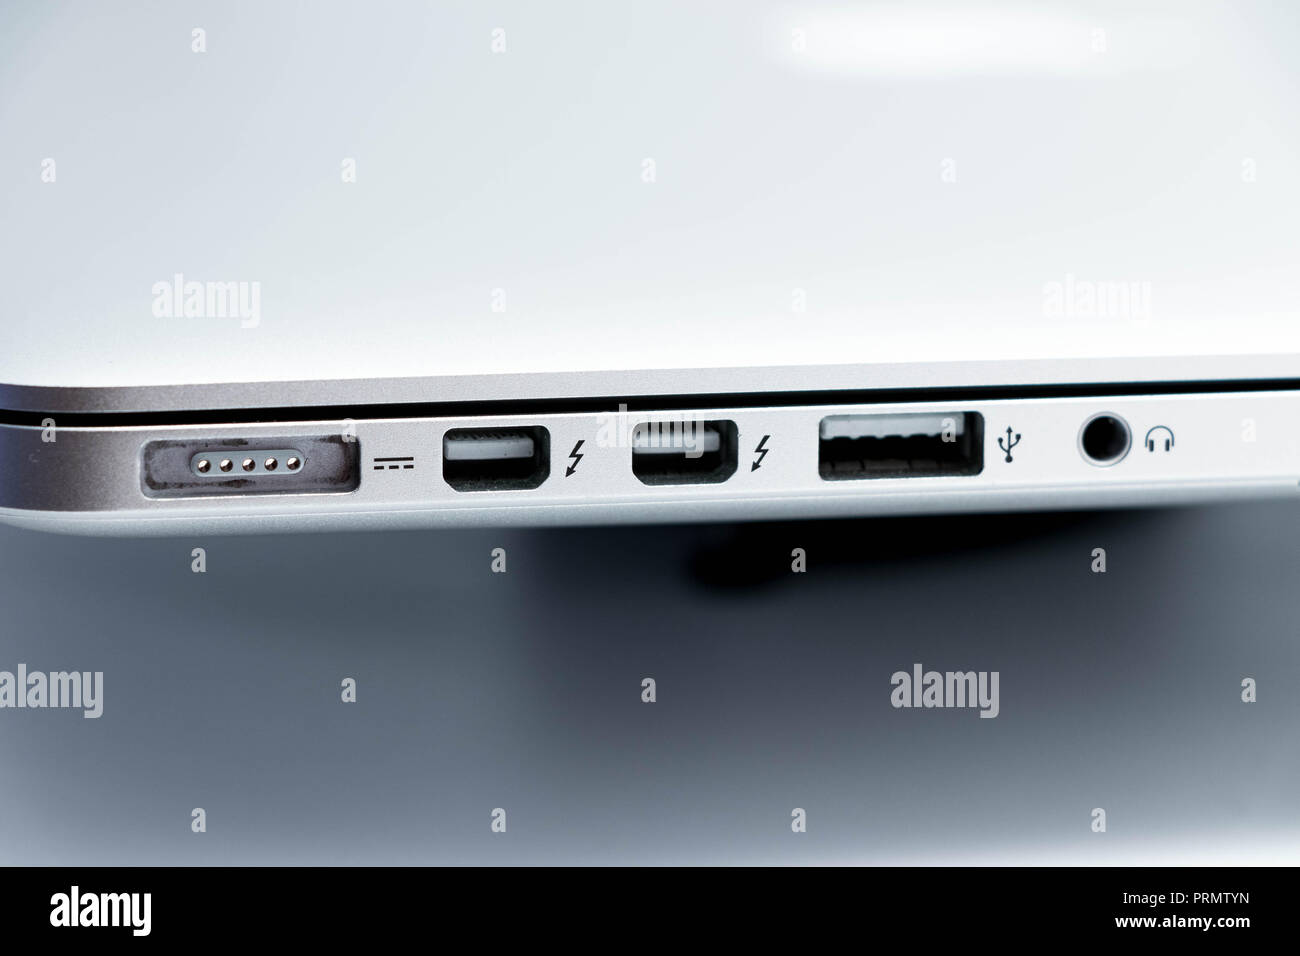 Computer Laptop Pro HDMI port Stock Photo Alamy